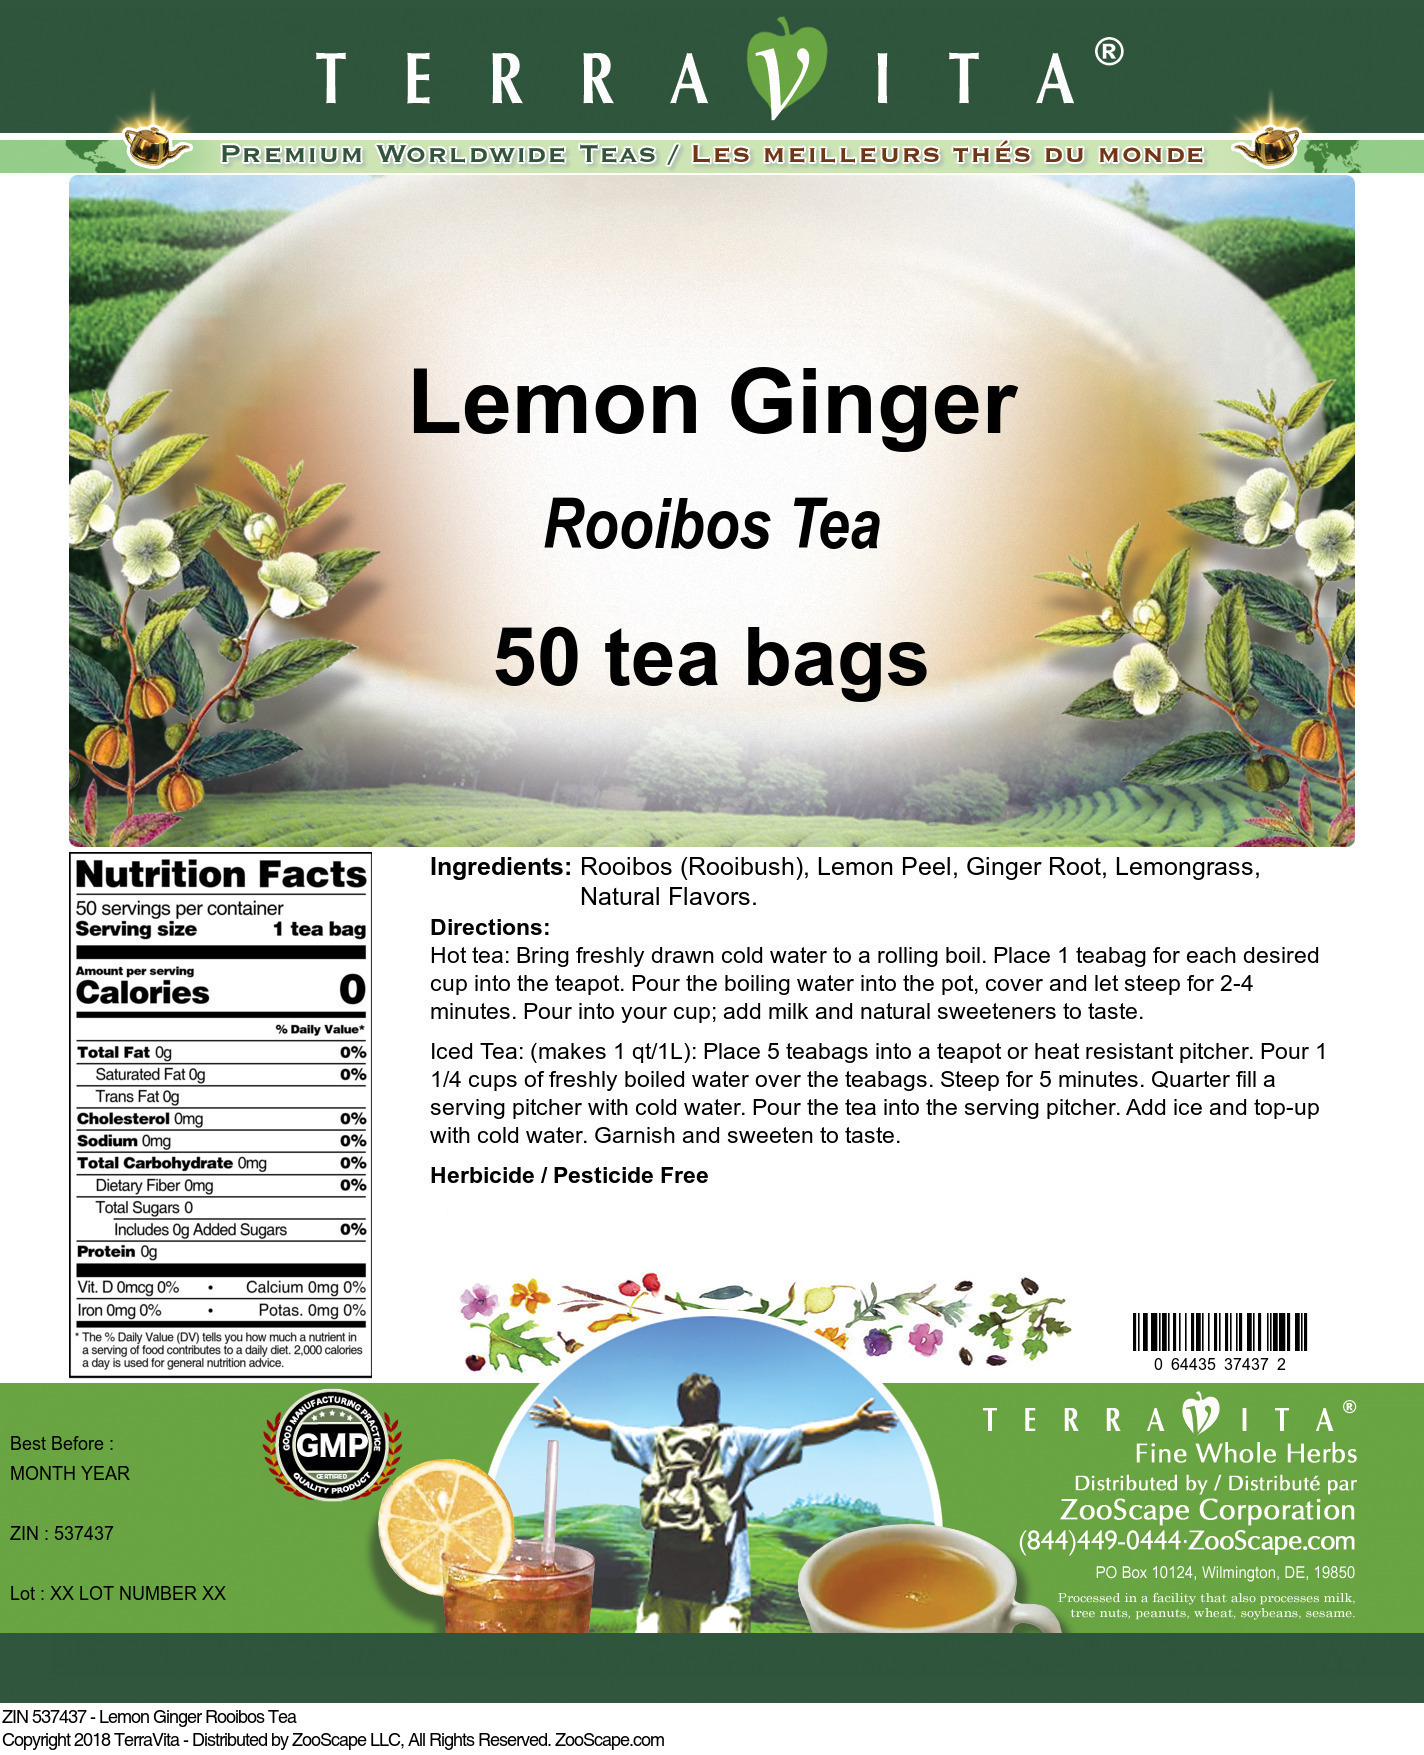 Lemon Ginger Rooibos Tea - Label